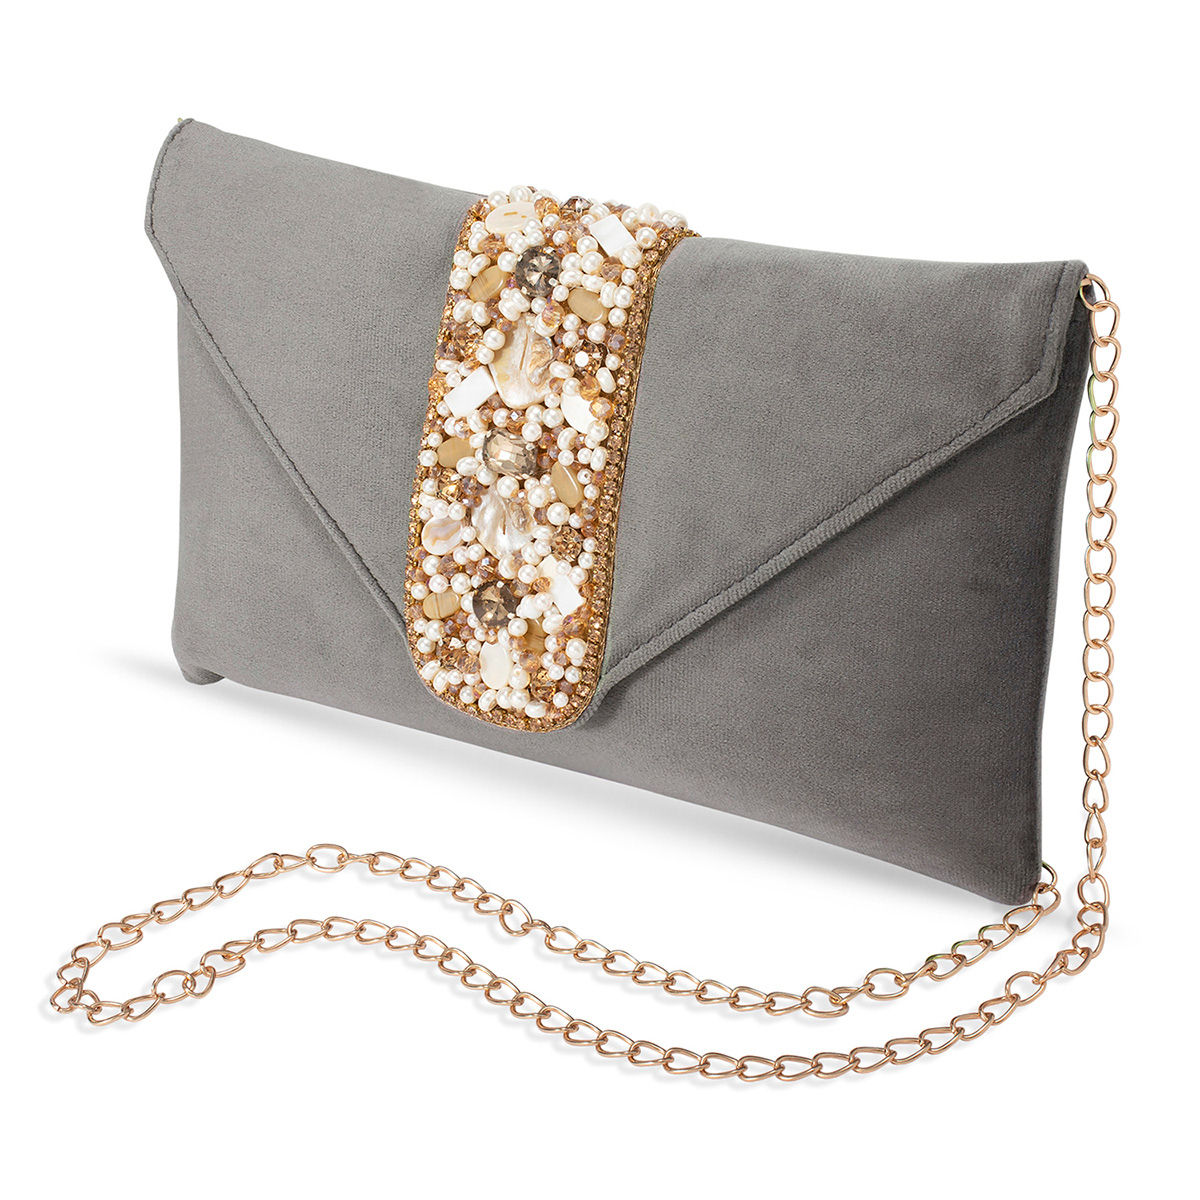 Clutch Bags | Black, Silver & Gold Clutch Purses | ASOS